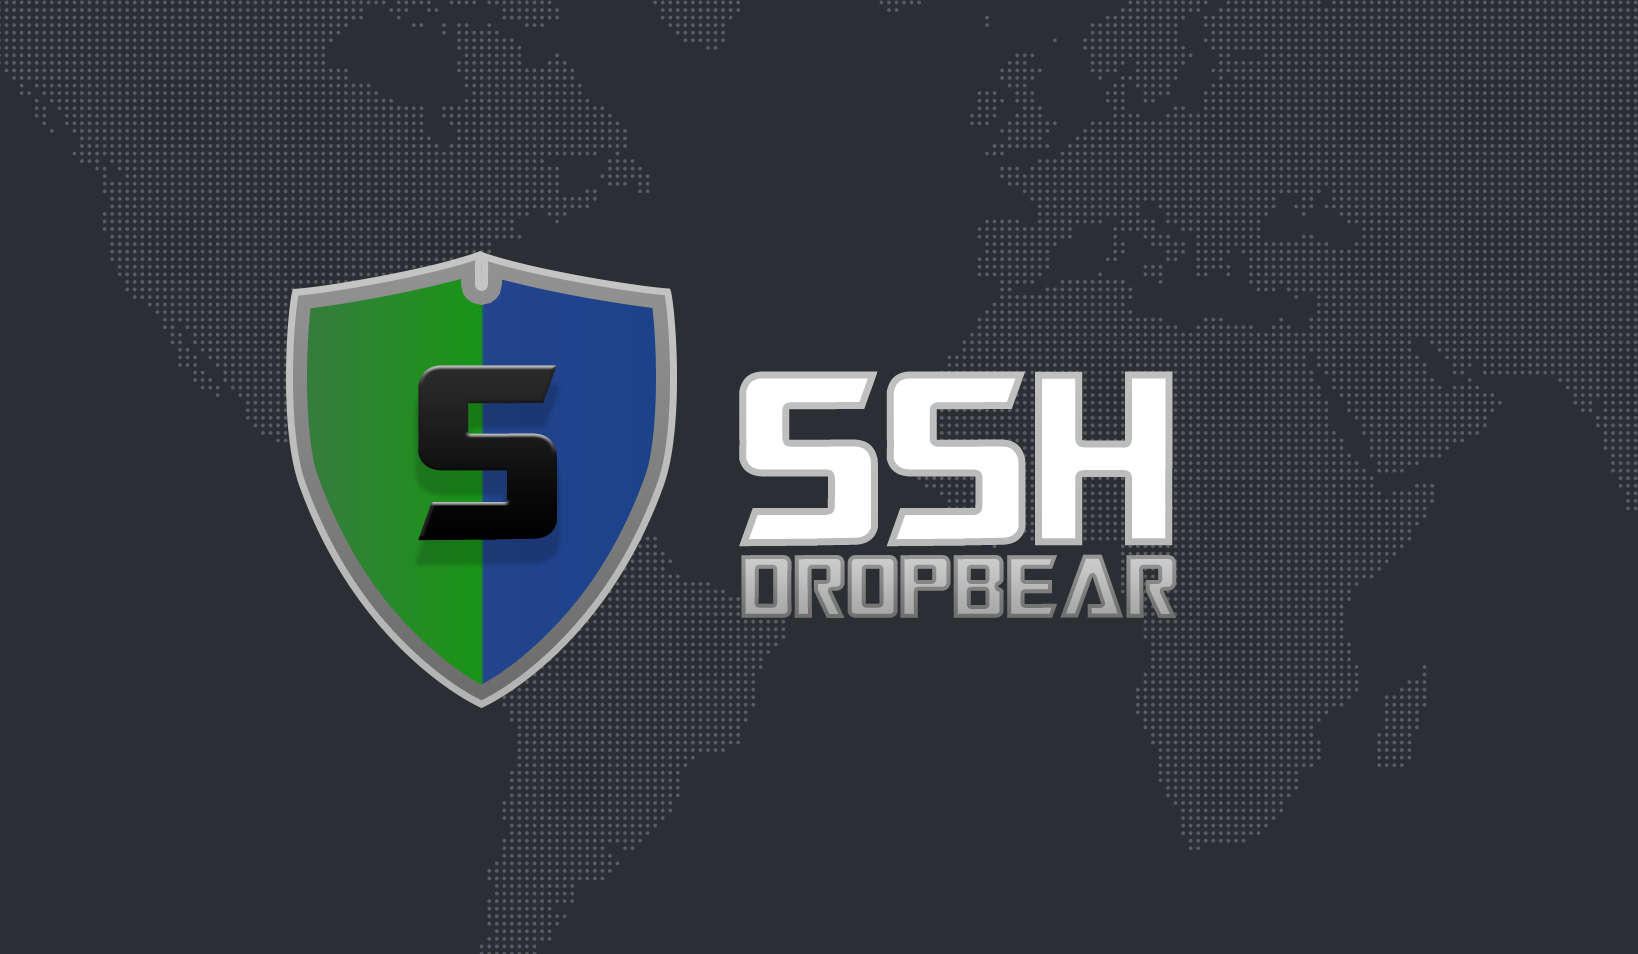 upgrade dropbear ssh